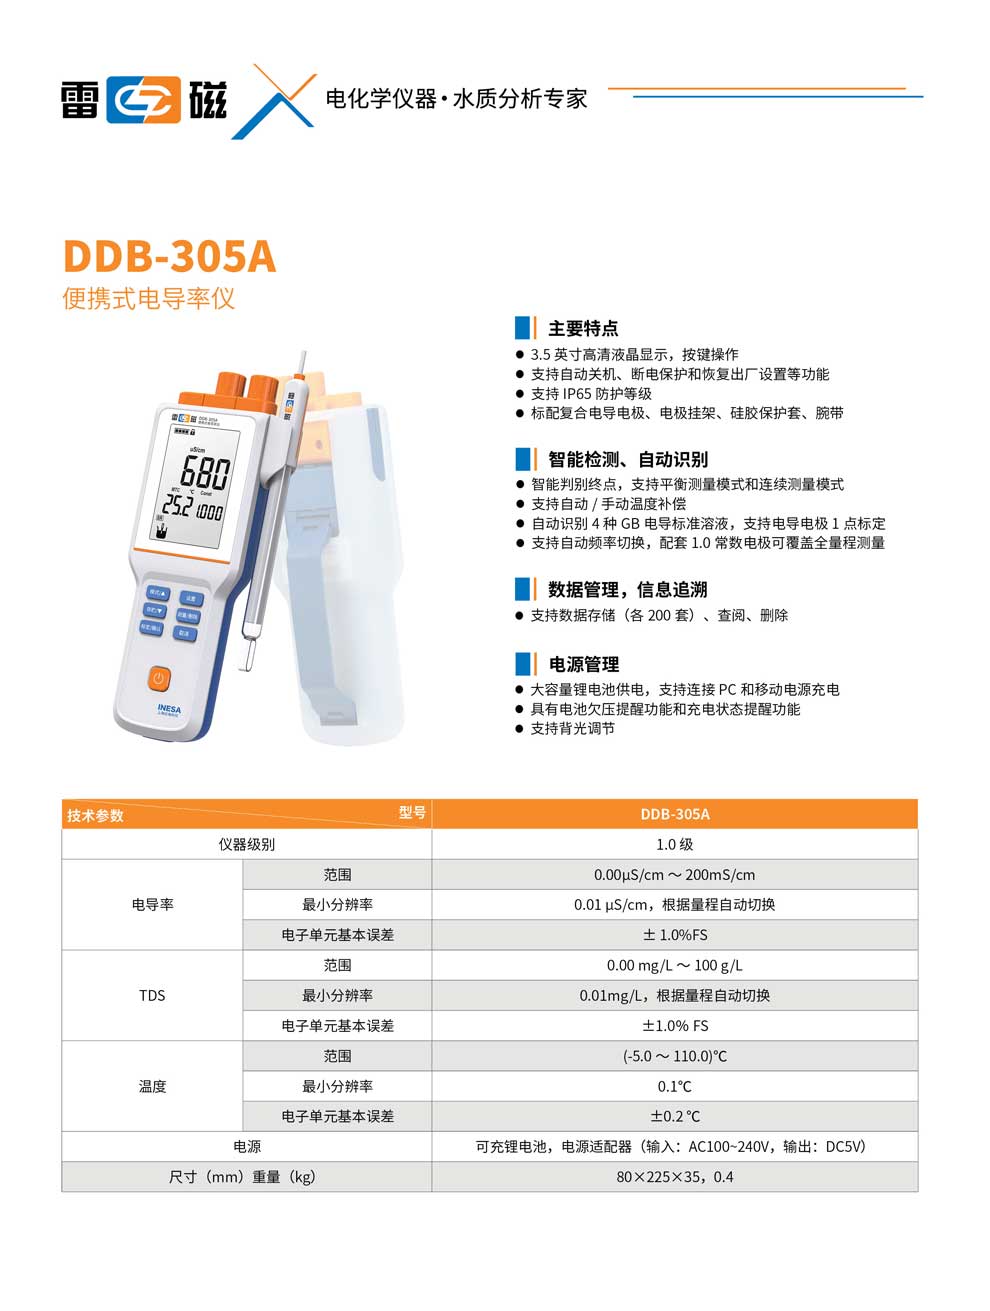 DDB-305A-彩页.jpg